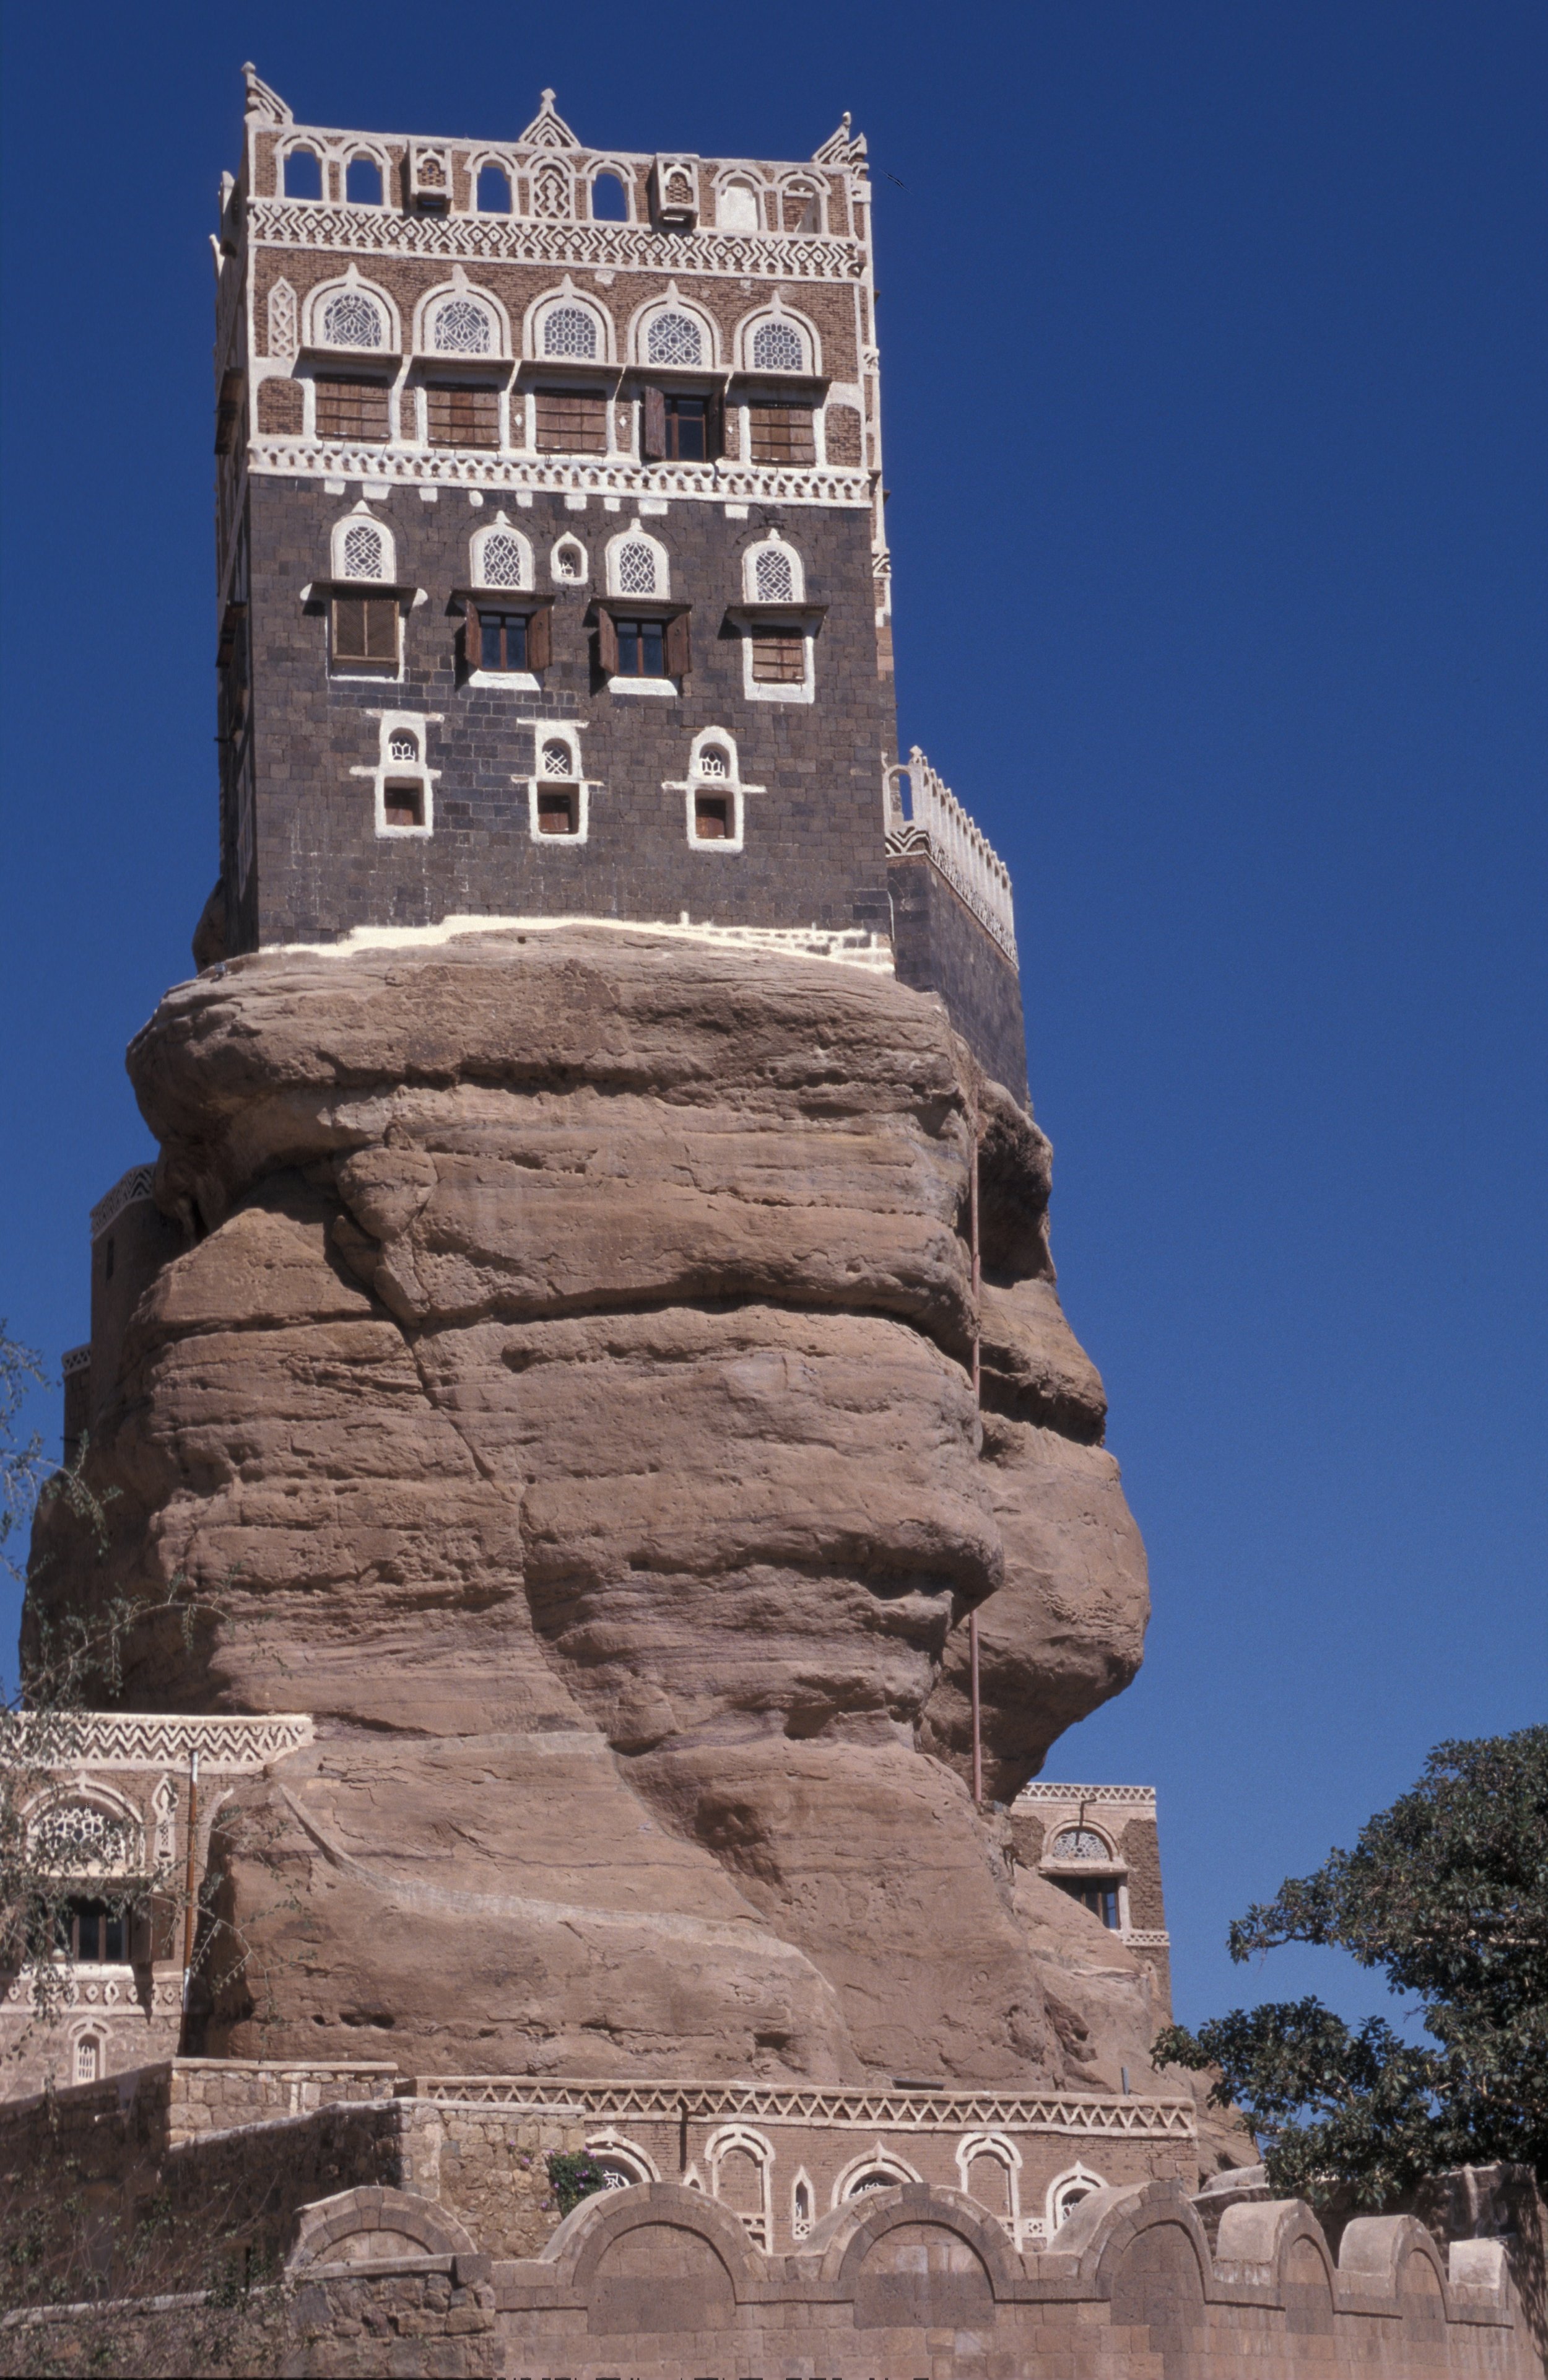 Yemen_yahya rock palace_MikeTonkin.jpg